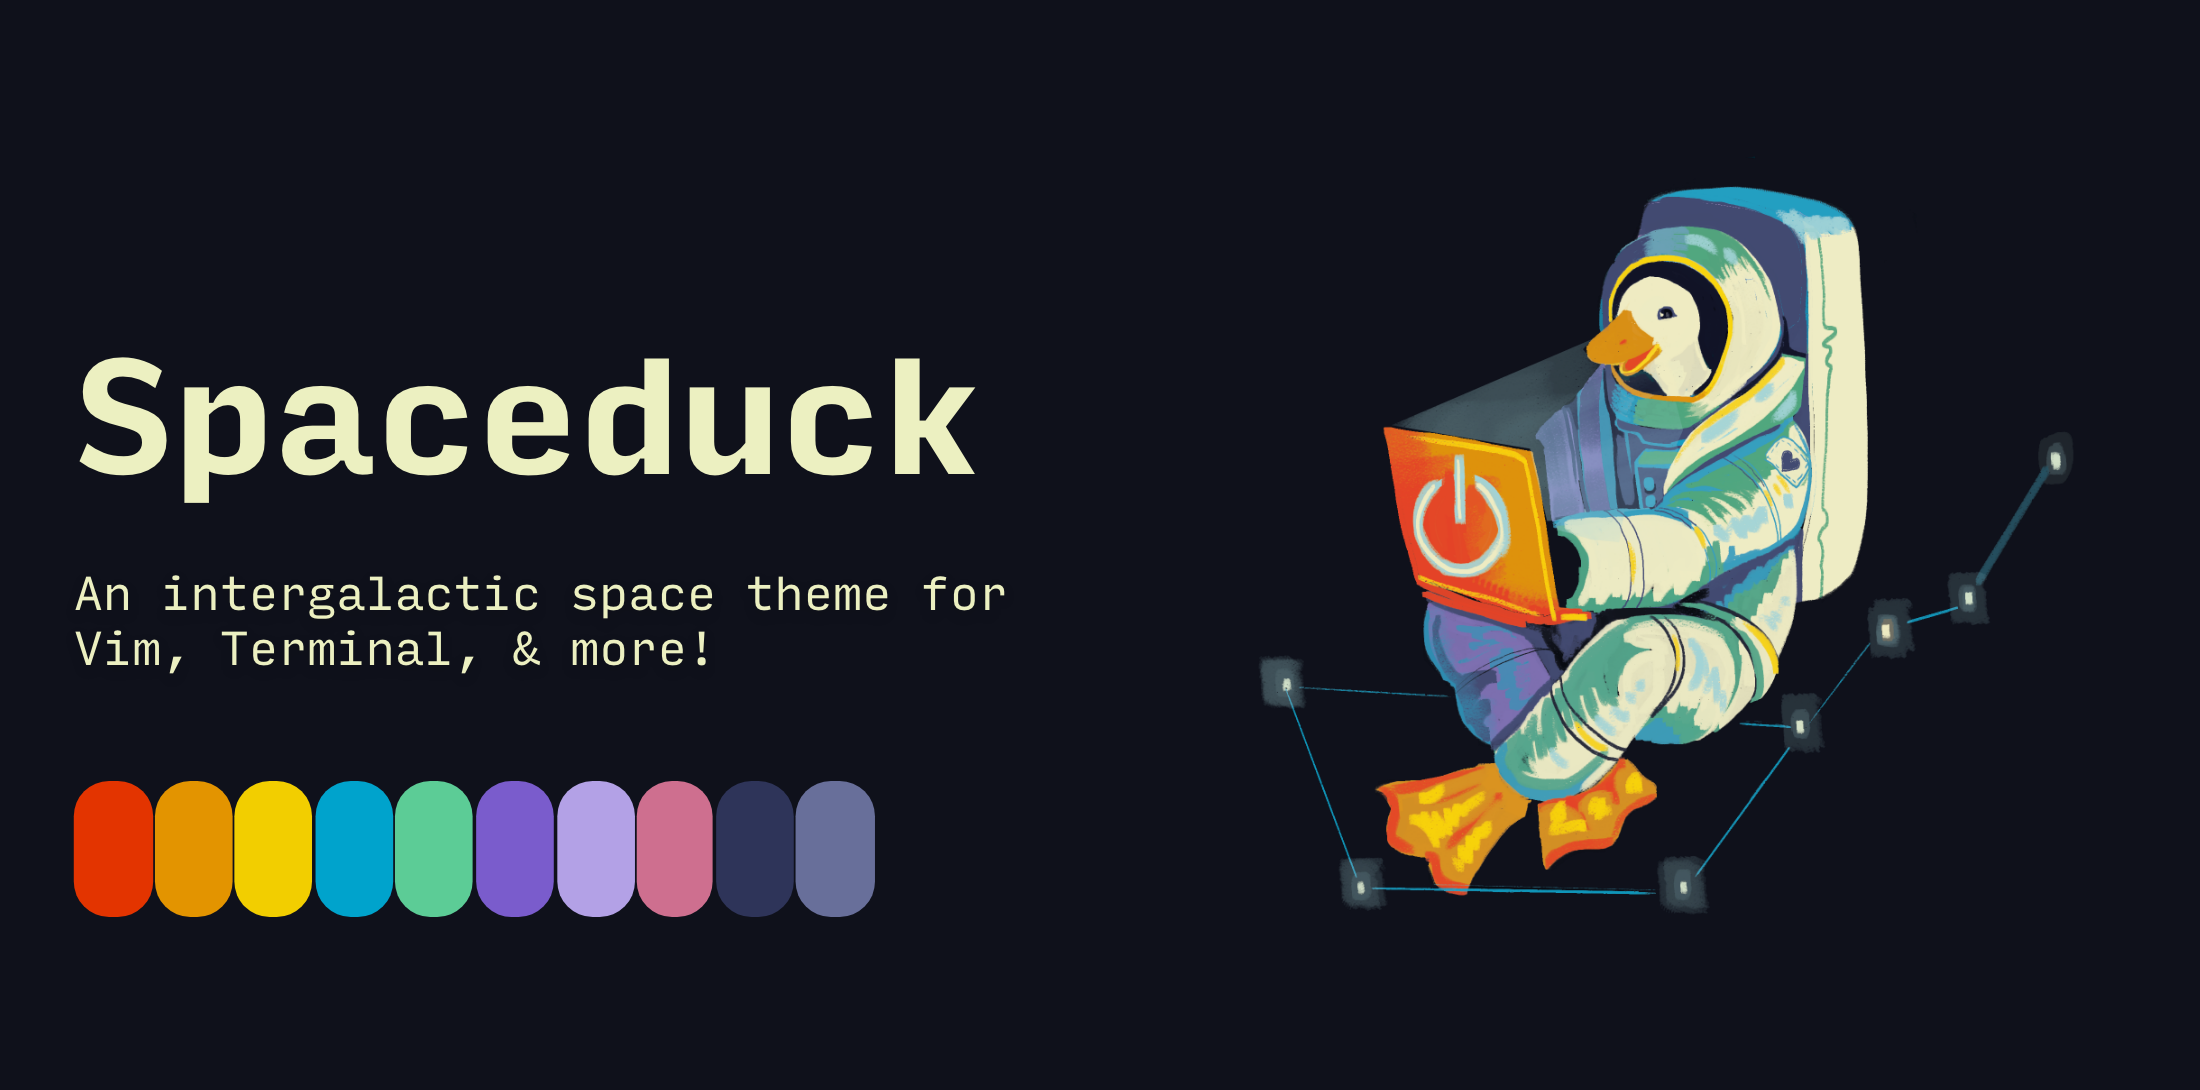 Spaceduck Logo of duck in an astronaut uniform holding computer: credit to Lexi @kalrita_lw